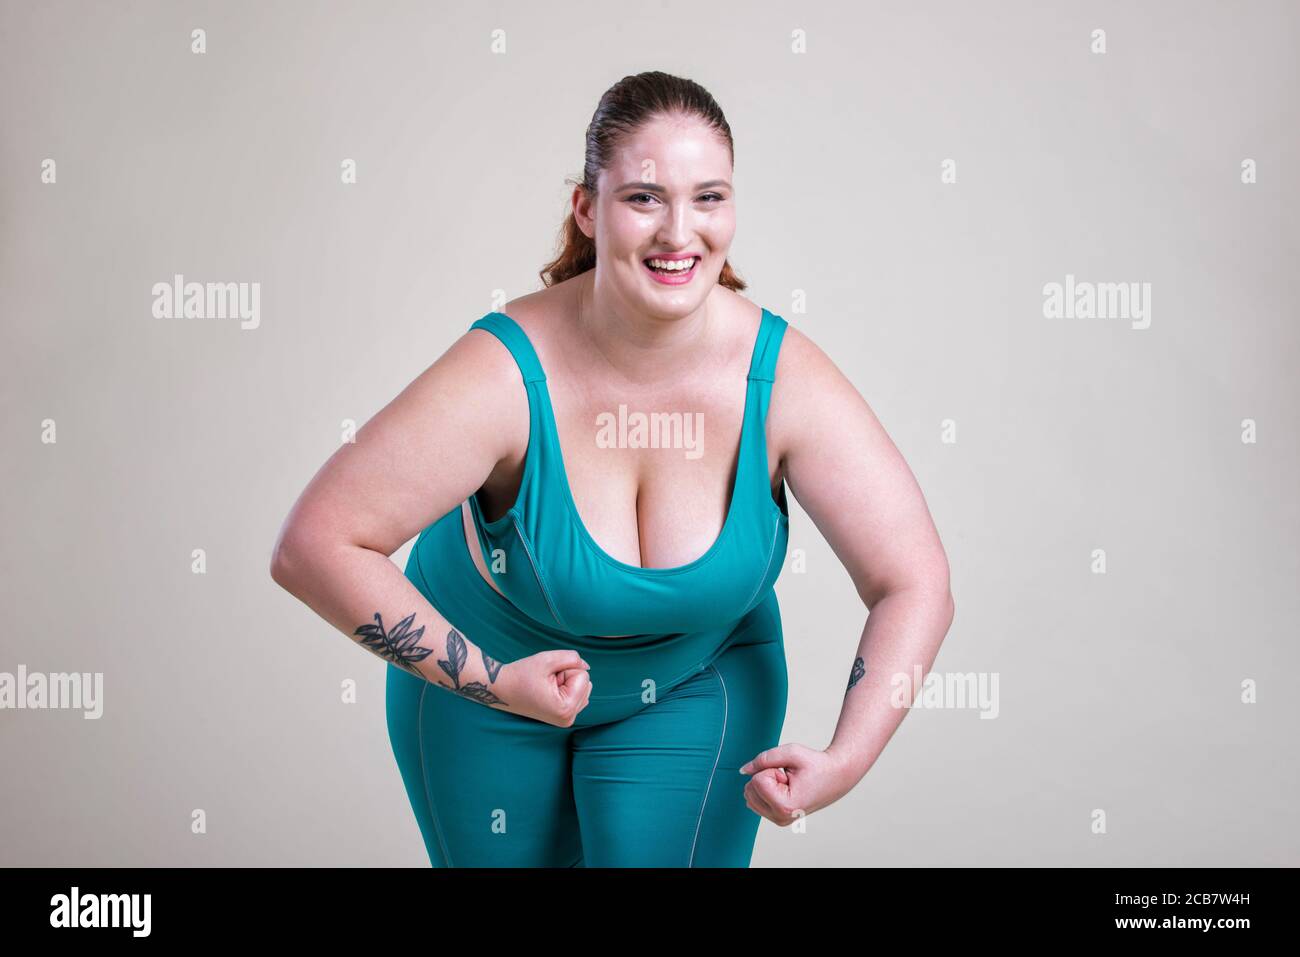 https://c8.alamy.com/comp/2CB7W4H/plus-size-woman-making-sport-and-fitness-studio-portraits-with-curvy-girl-2CB7W4H.jpg